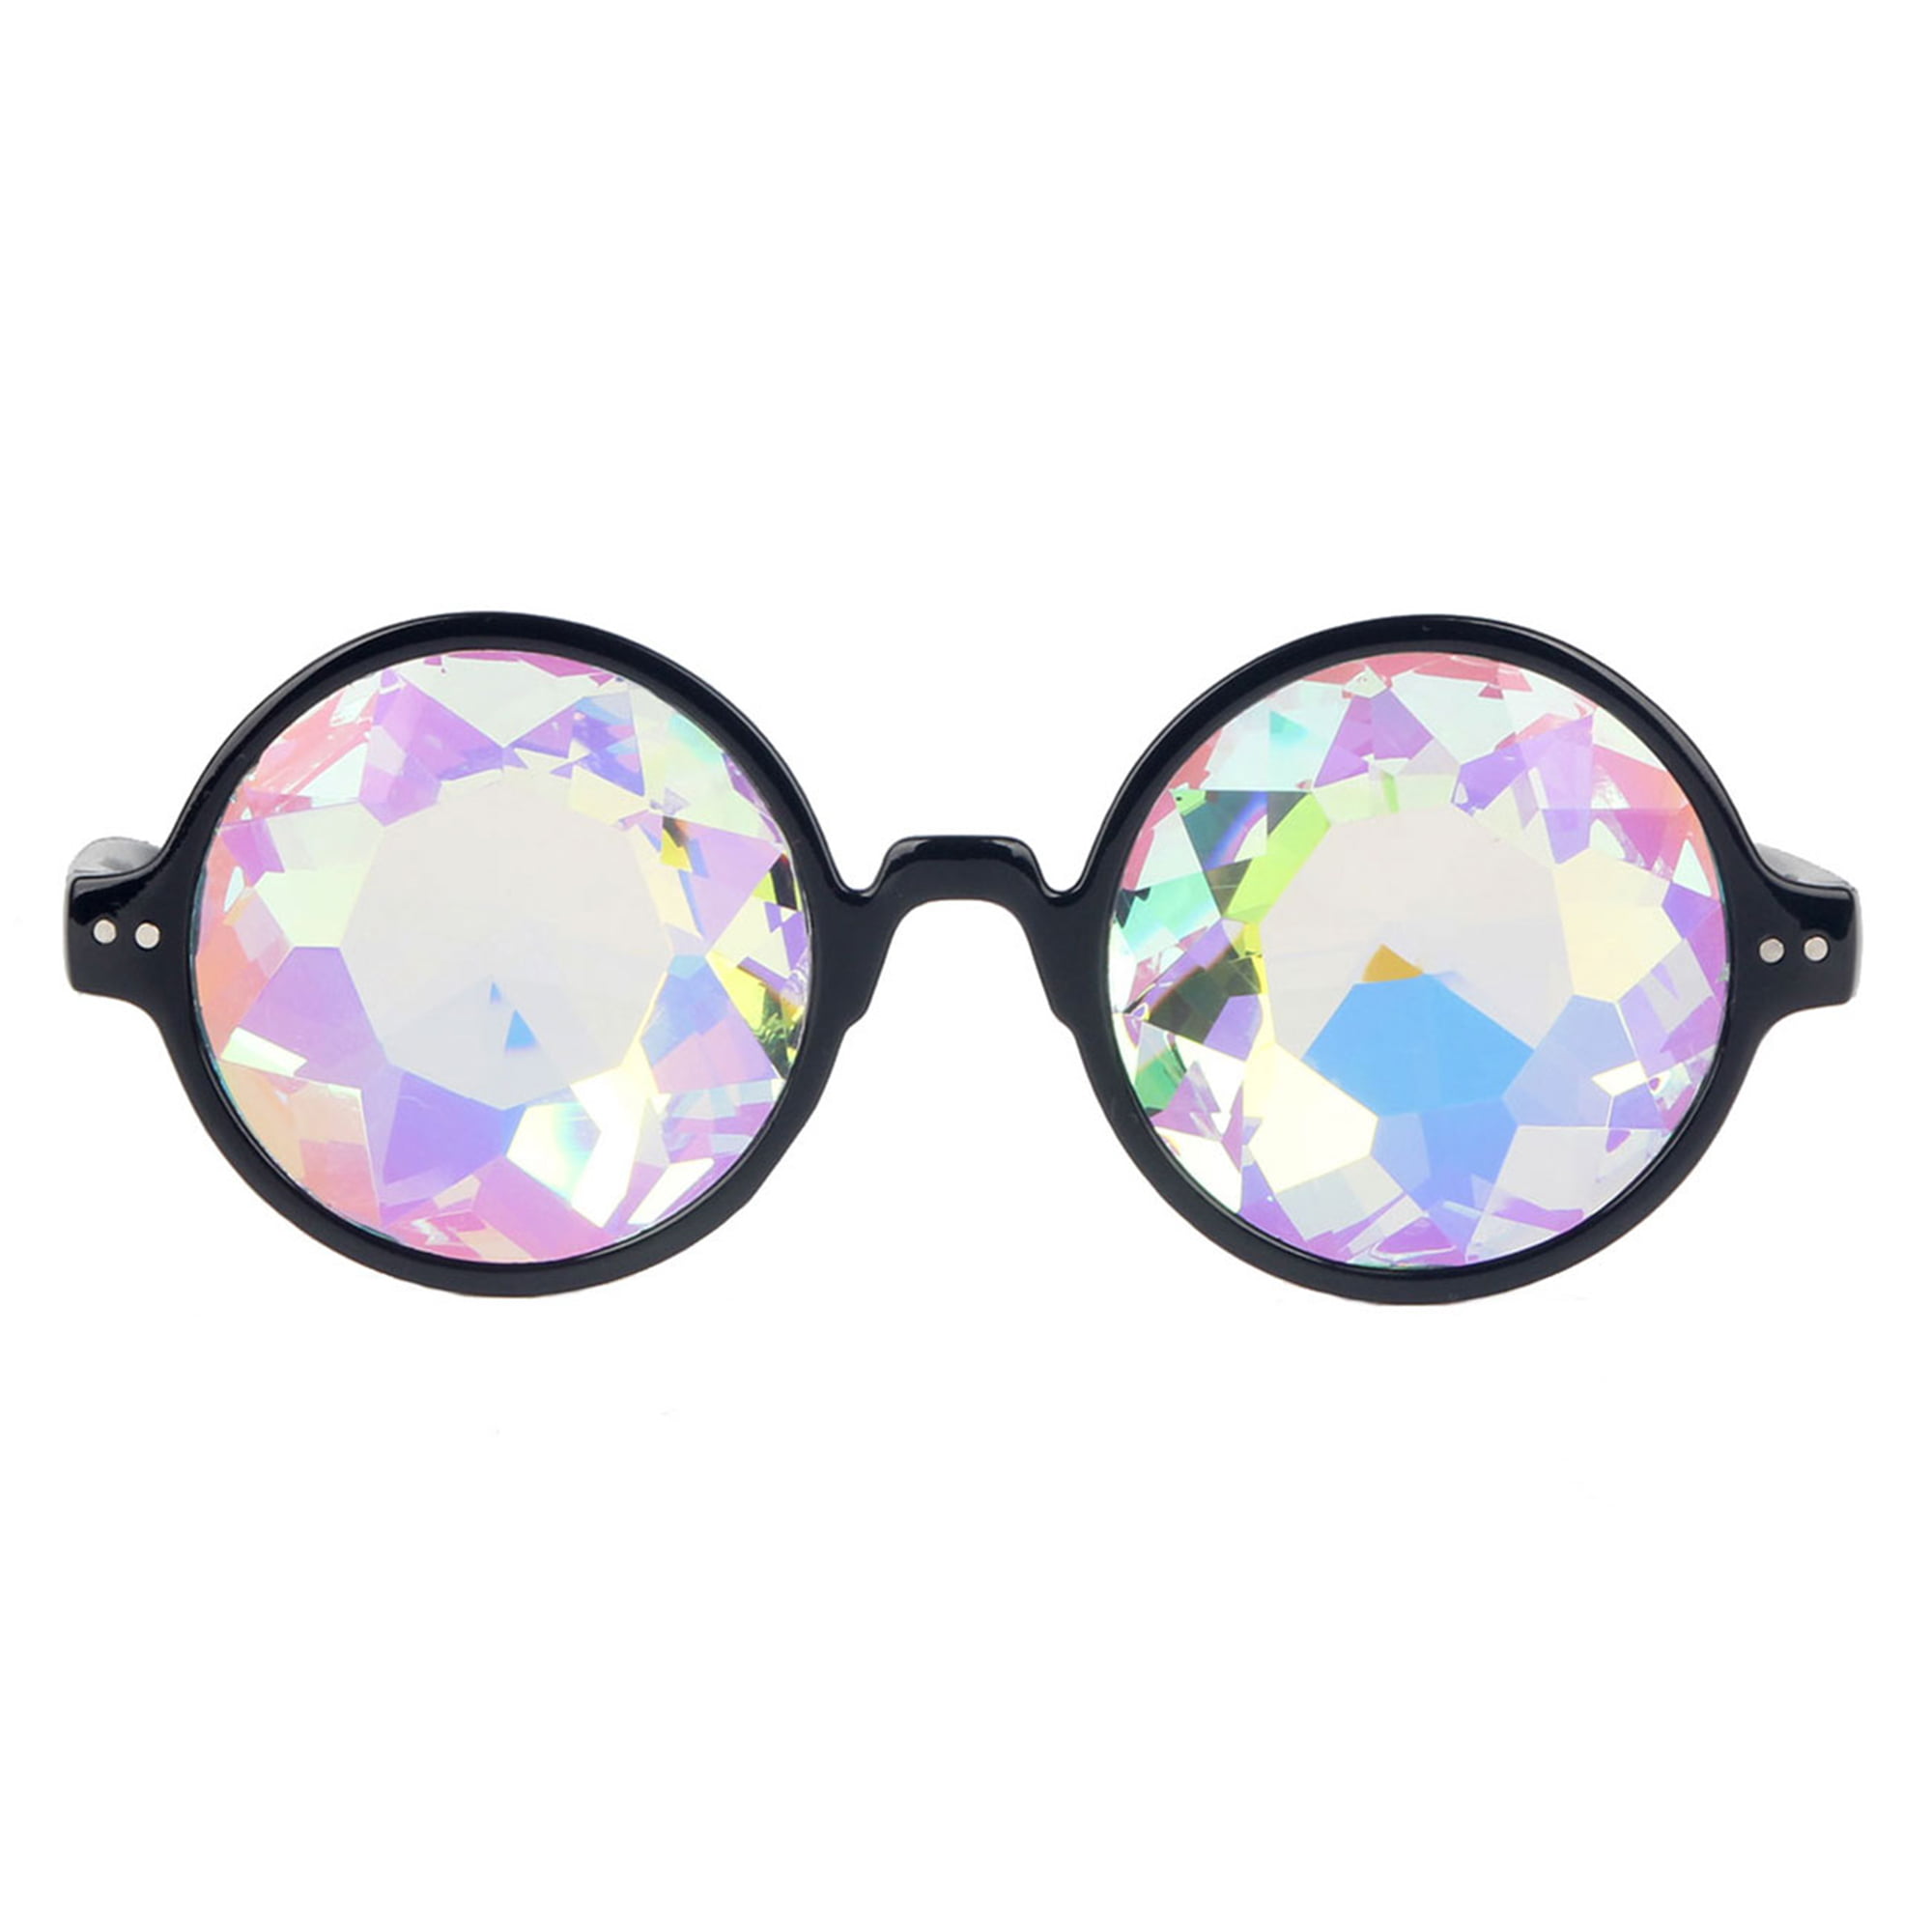 Blaze Forbindelse disharmoni Kaleidoscope Glasses Festival Cosplay Rainbow Prism Sunglasses Goggles for  Raves Rainbow Prism Diffraction Crystal Lenses - Walmart.com